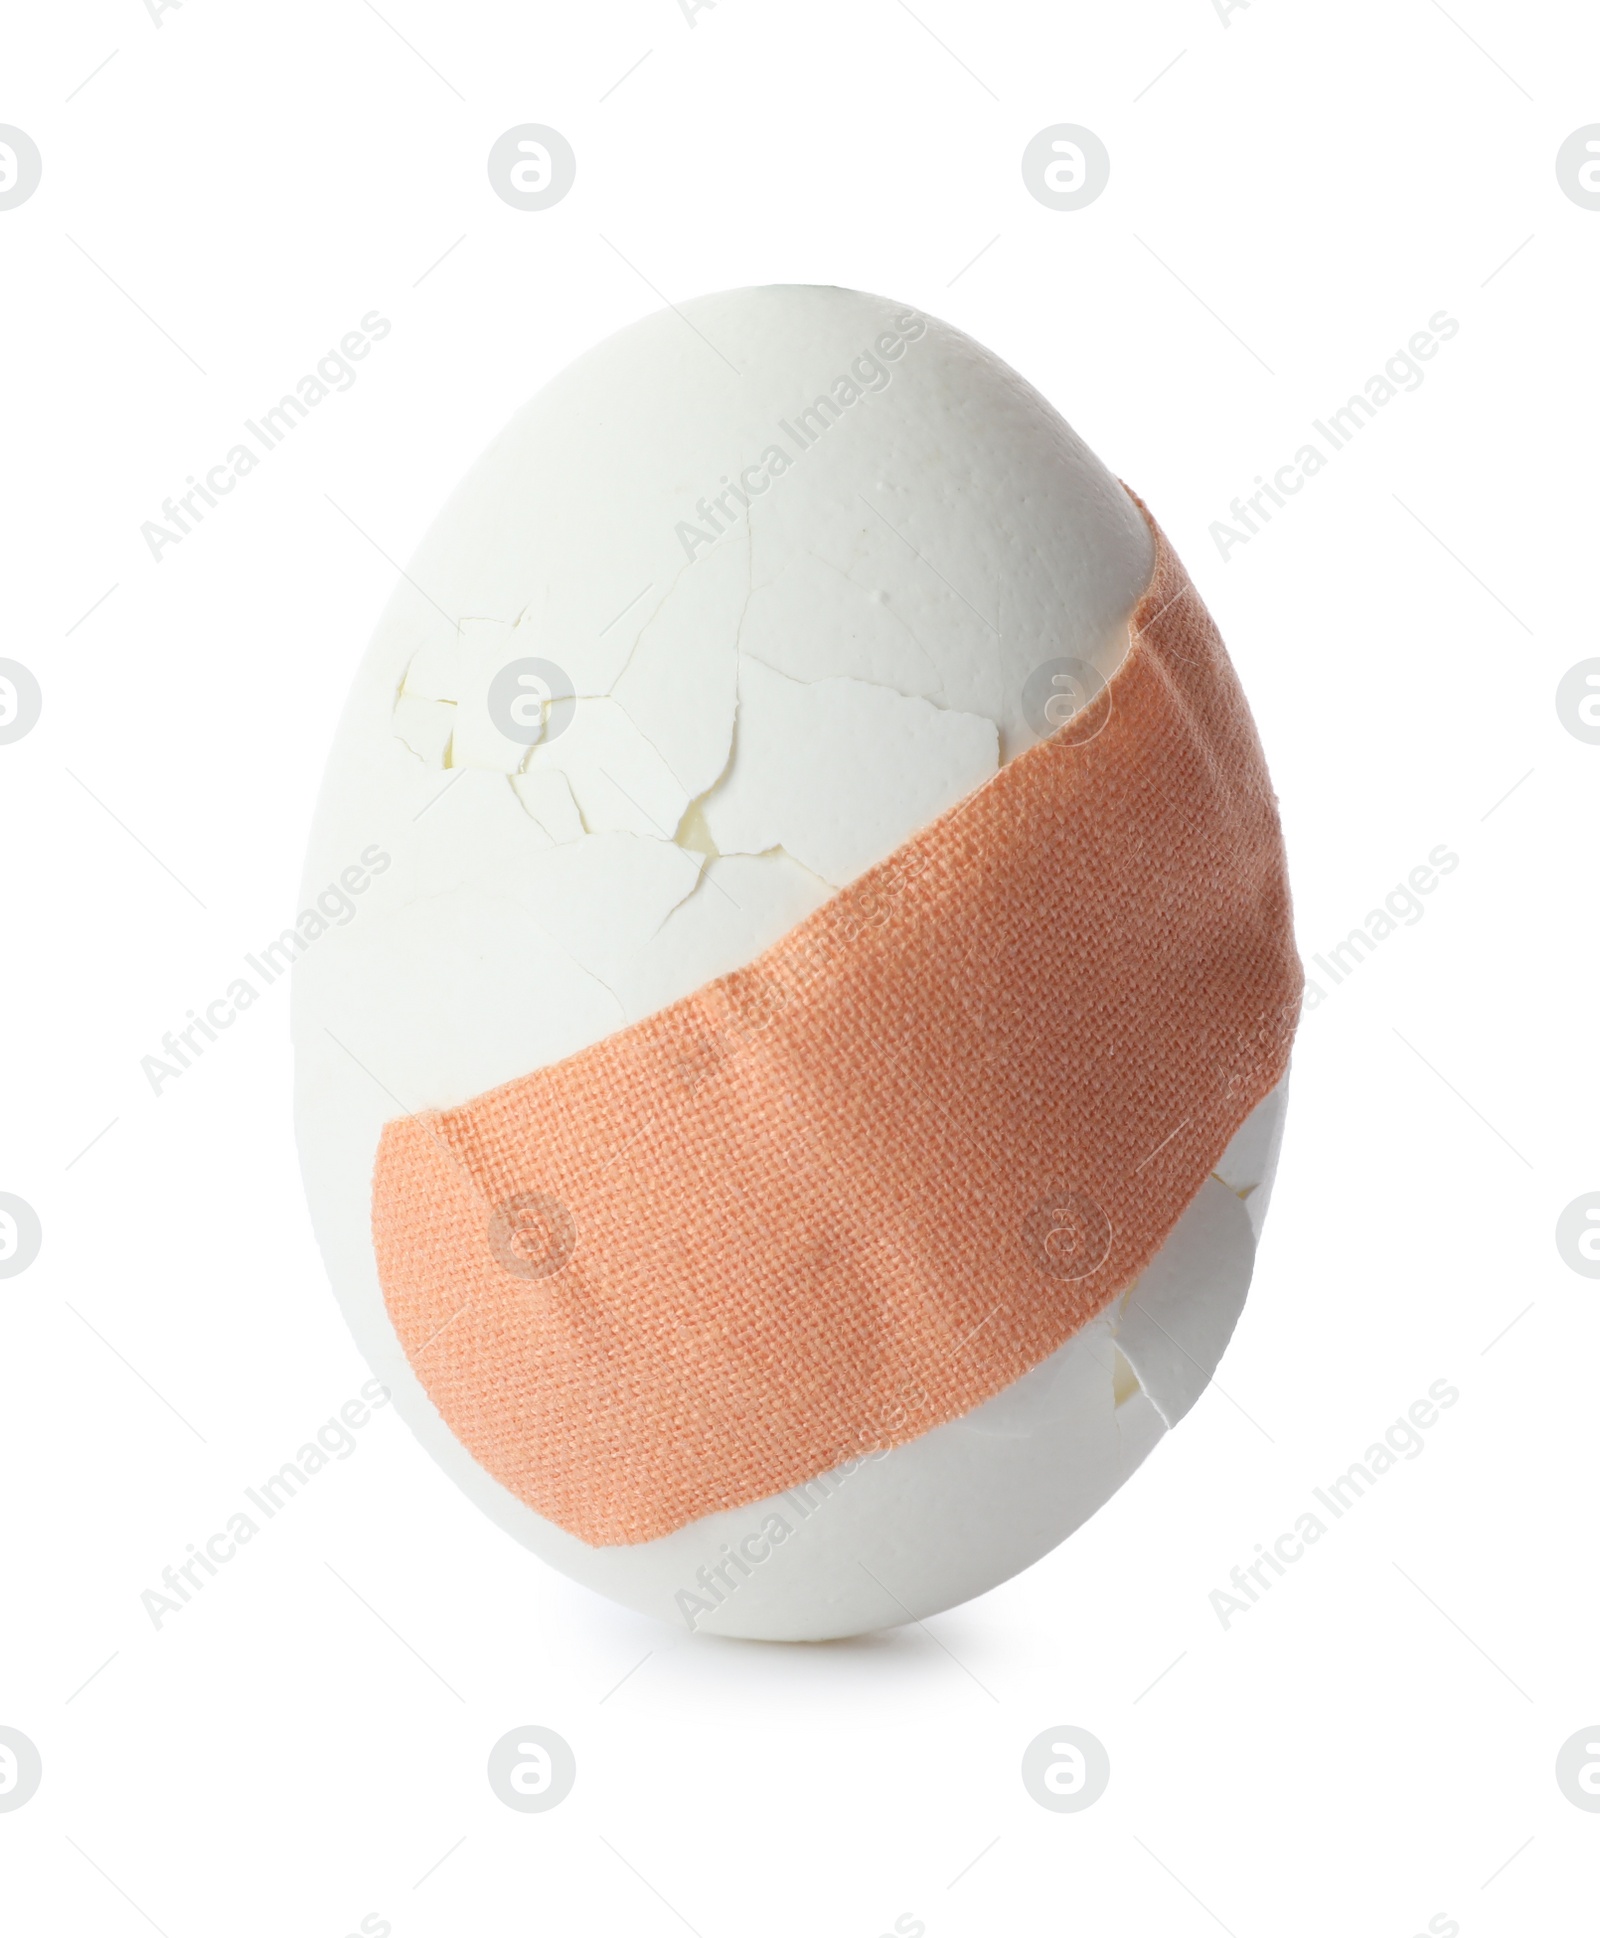 Photo of Cracked egg with sticking plaster isolated on white